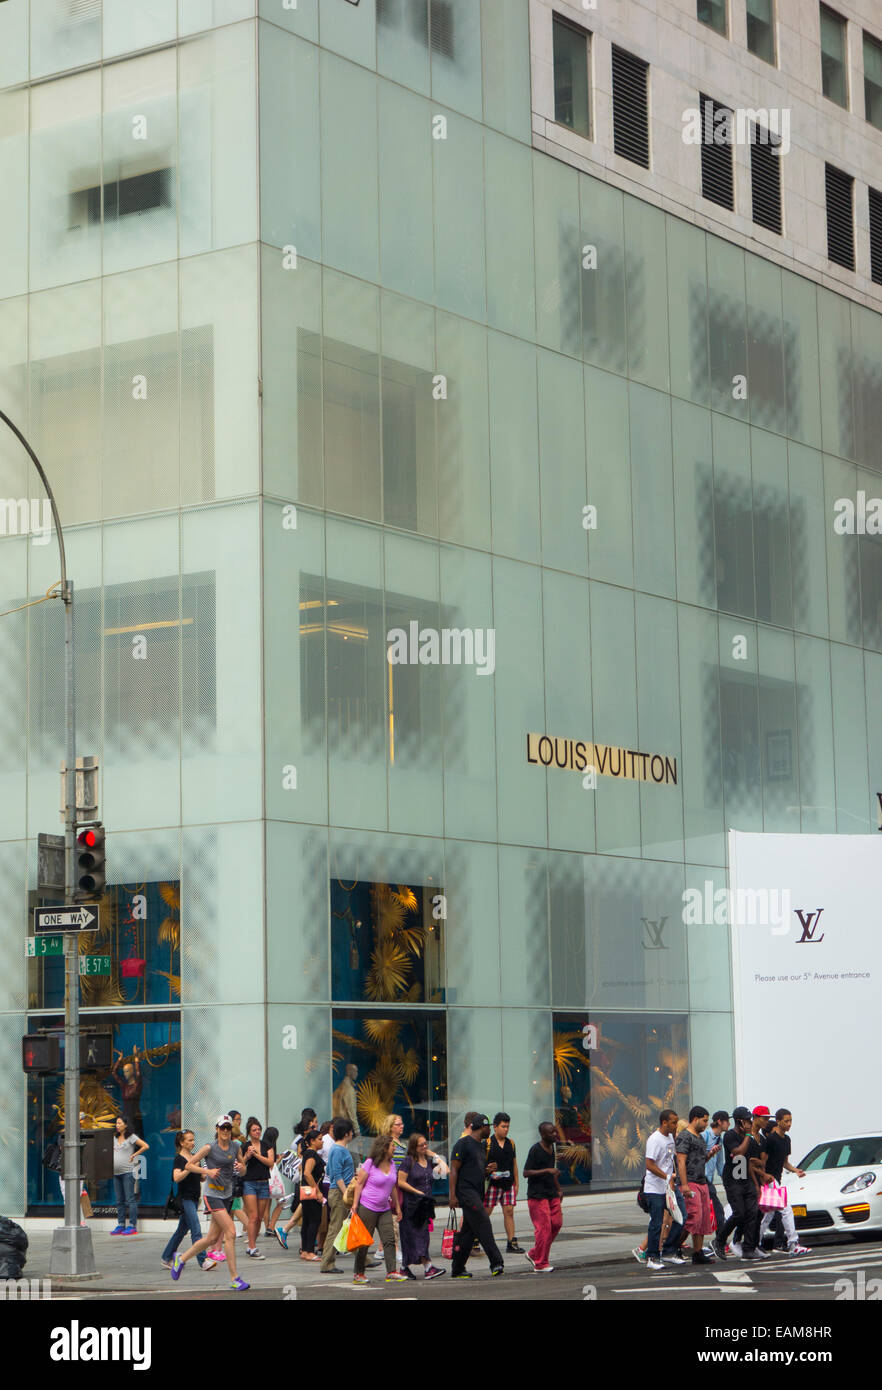 Louis Vuitton Headquarters, New York City, USA Stock Photo - Alamy